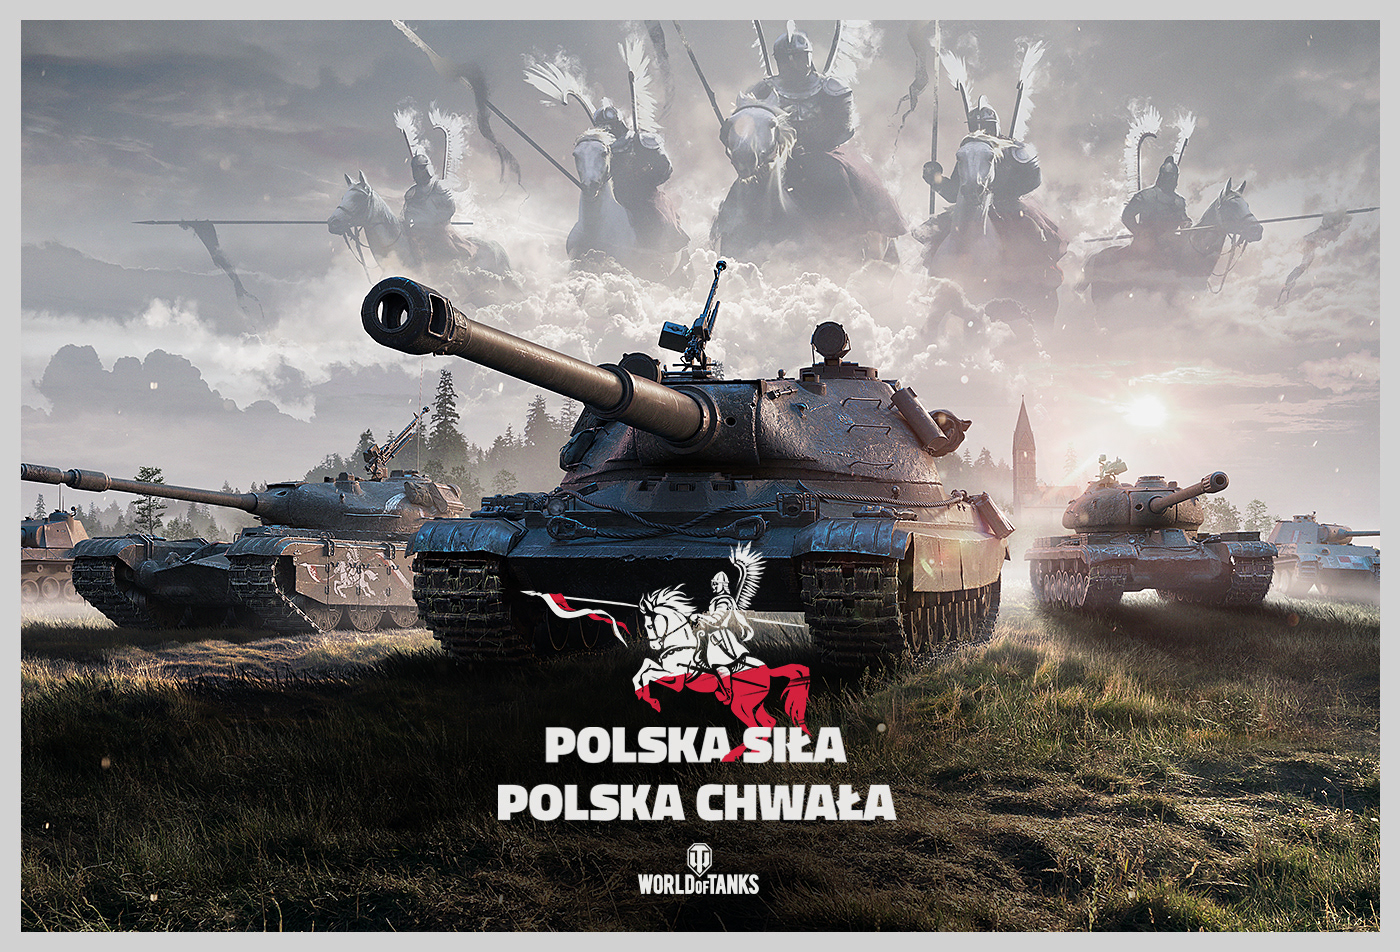 polska siła world of tanks 0.s.t.r. Żywiołak polish music art direction  partnerships collaborations branding  logo